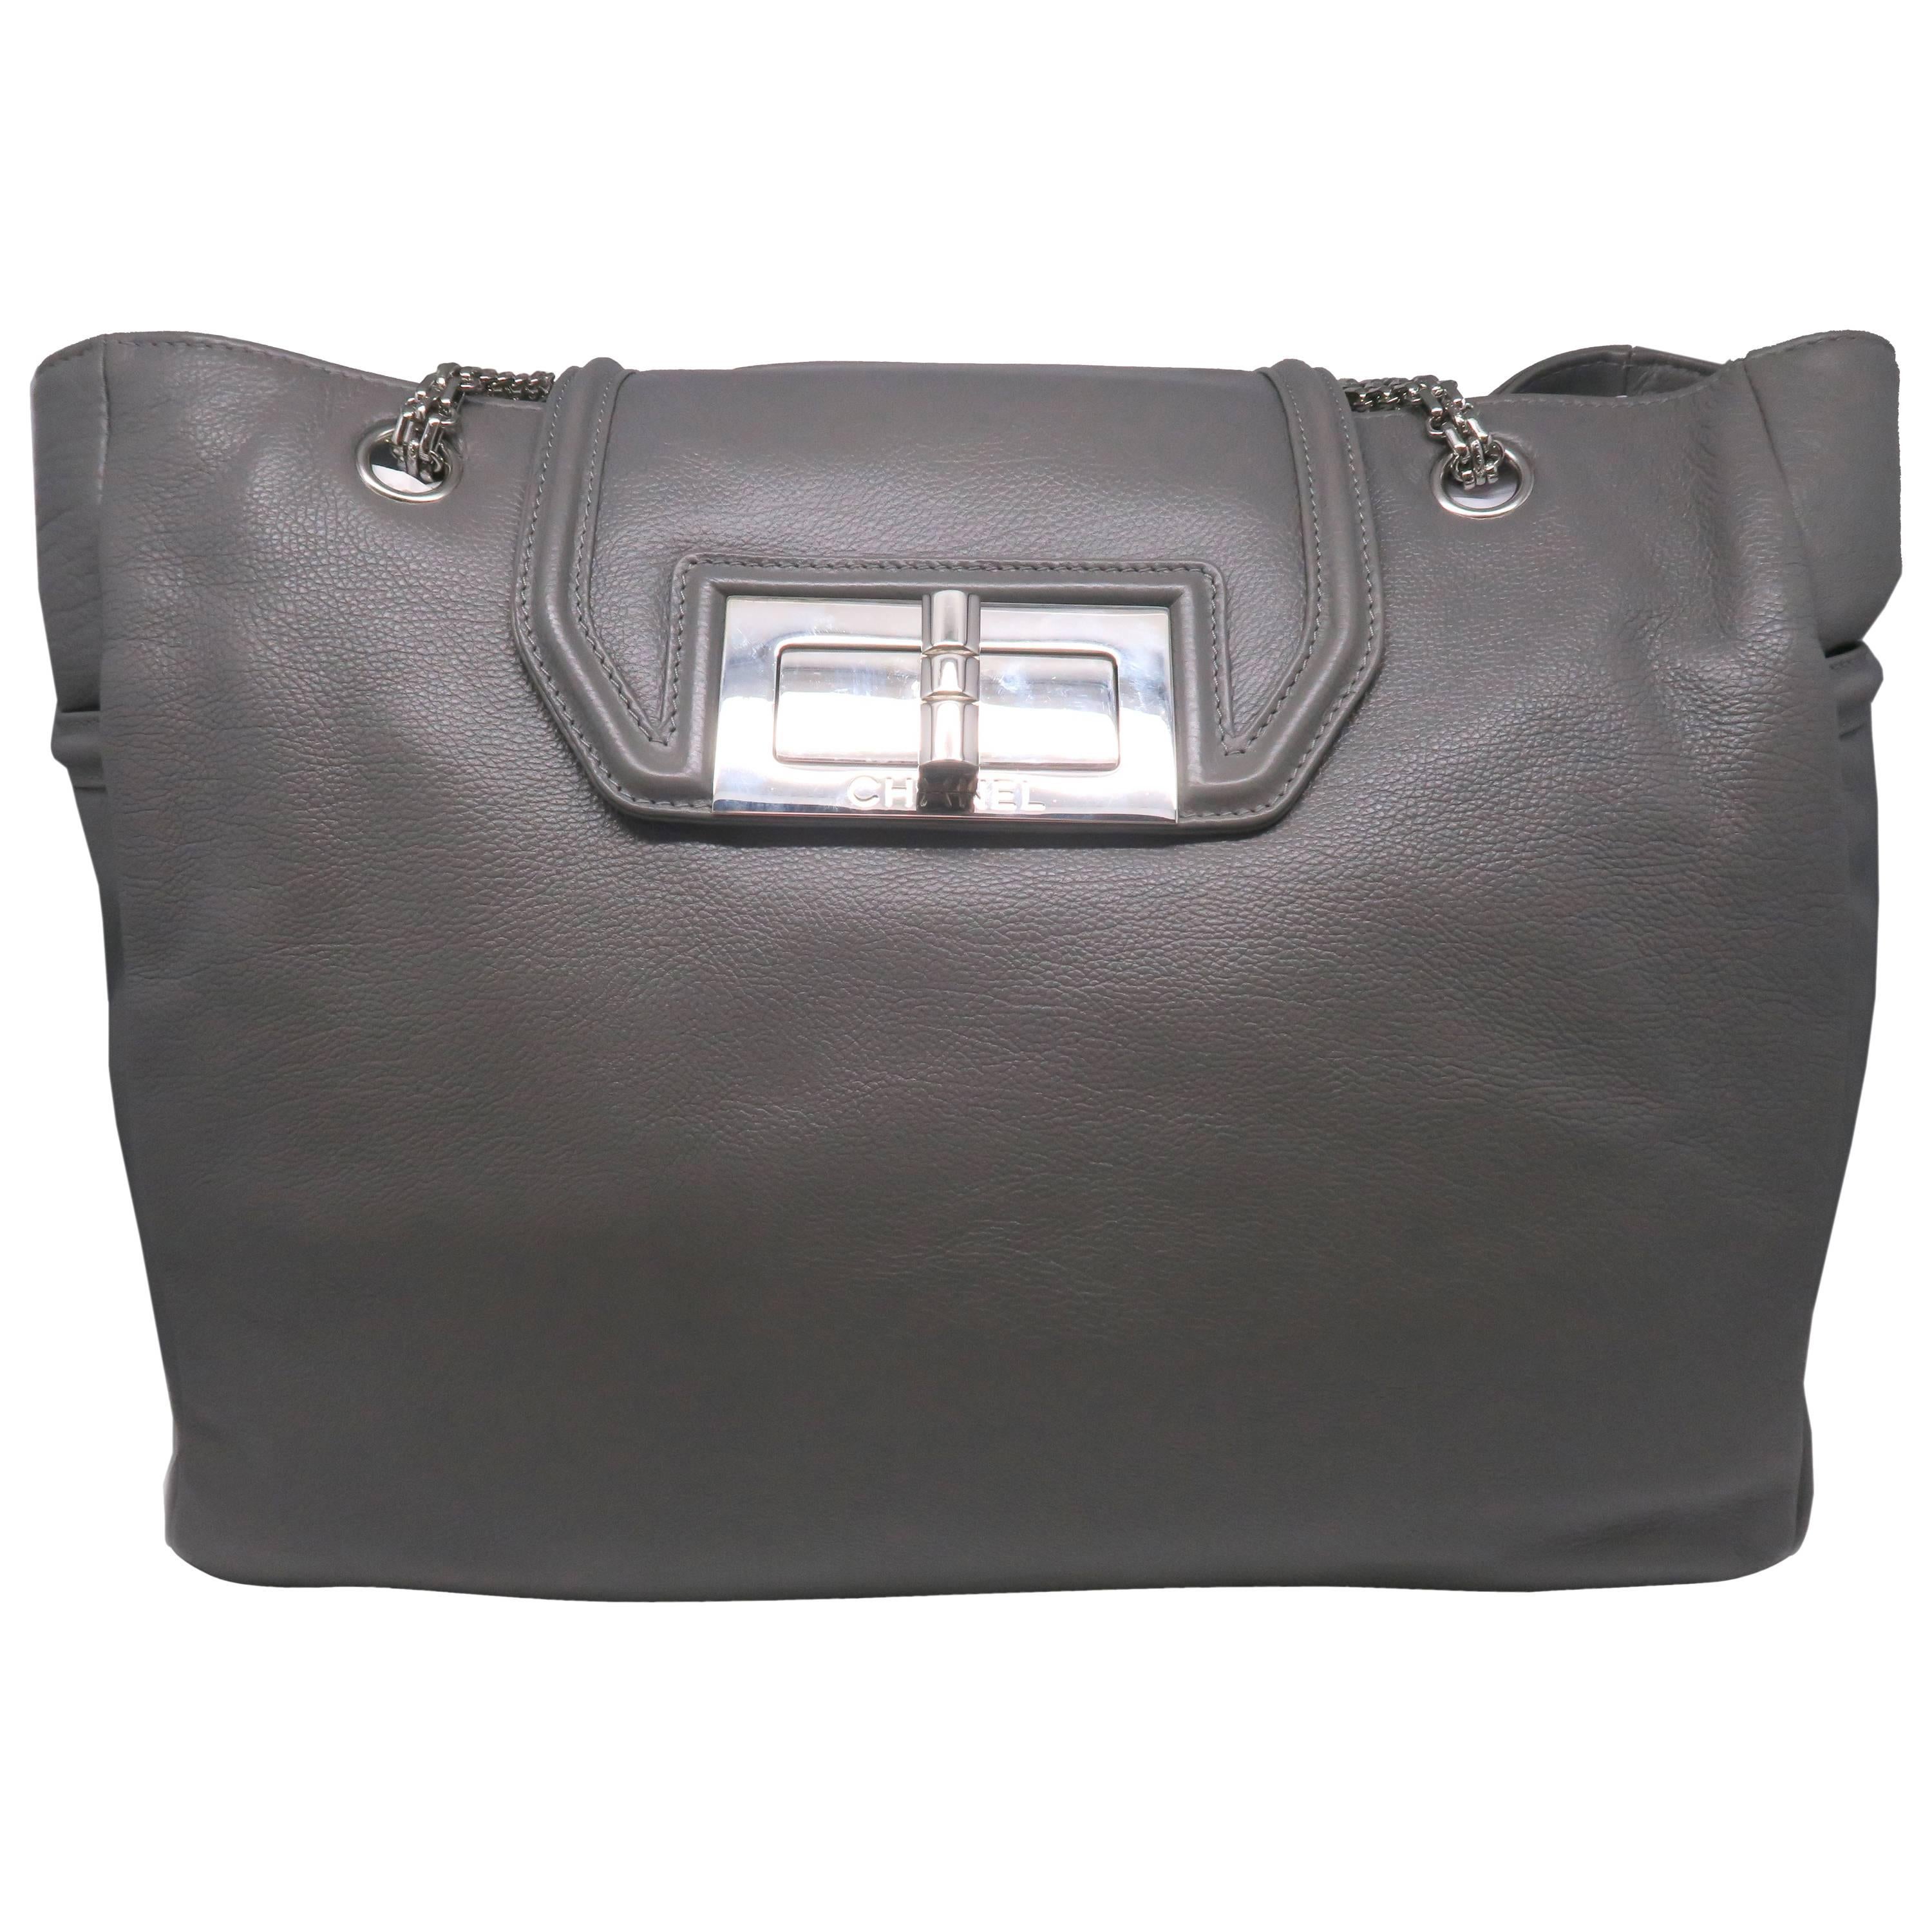 Chanel Grey Calfskin Leather Silver Metal Chain Shoulder Bag For Sale